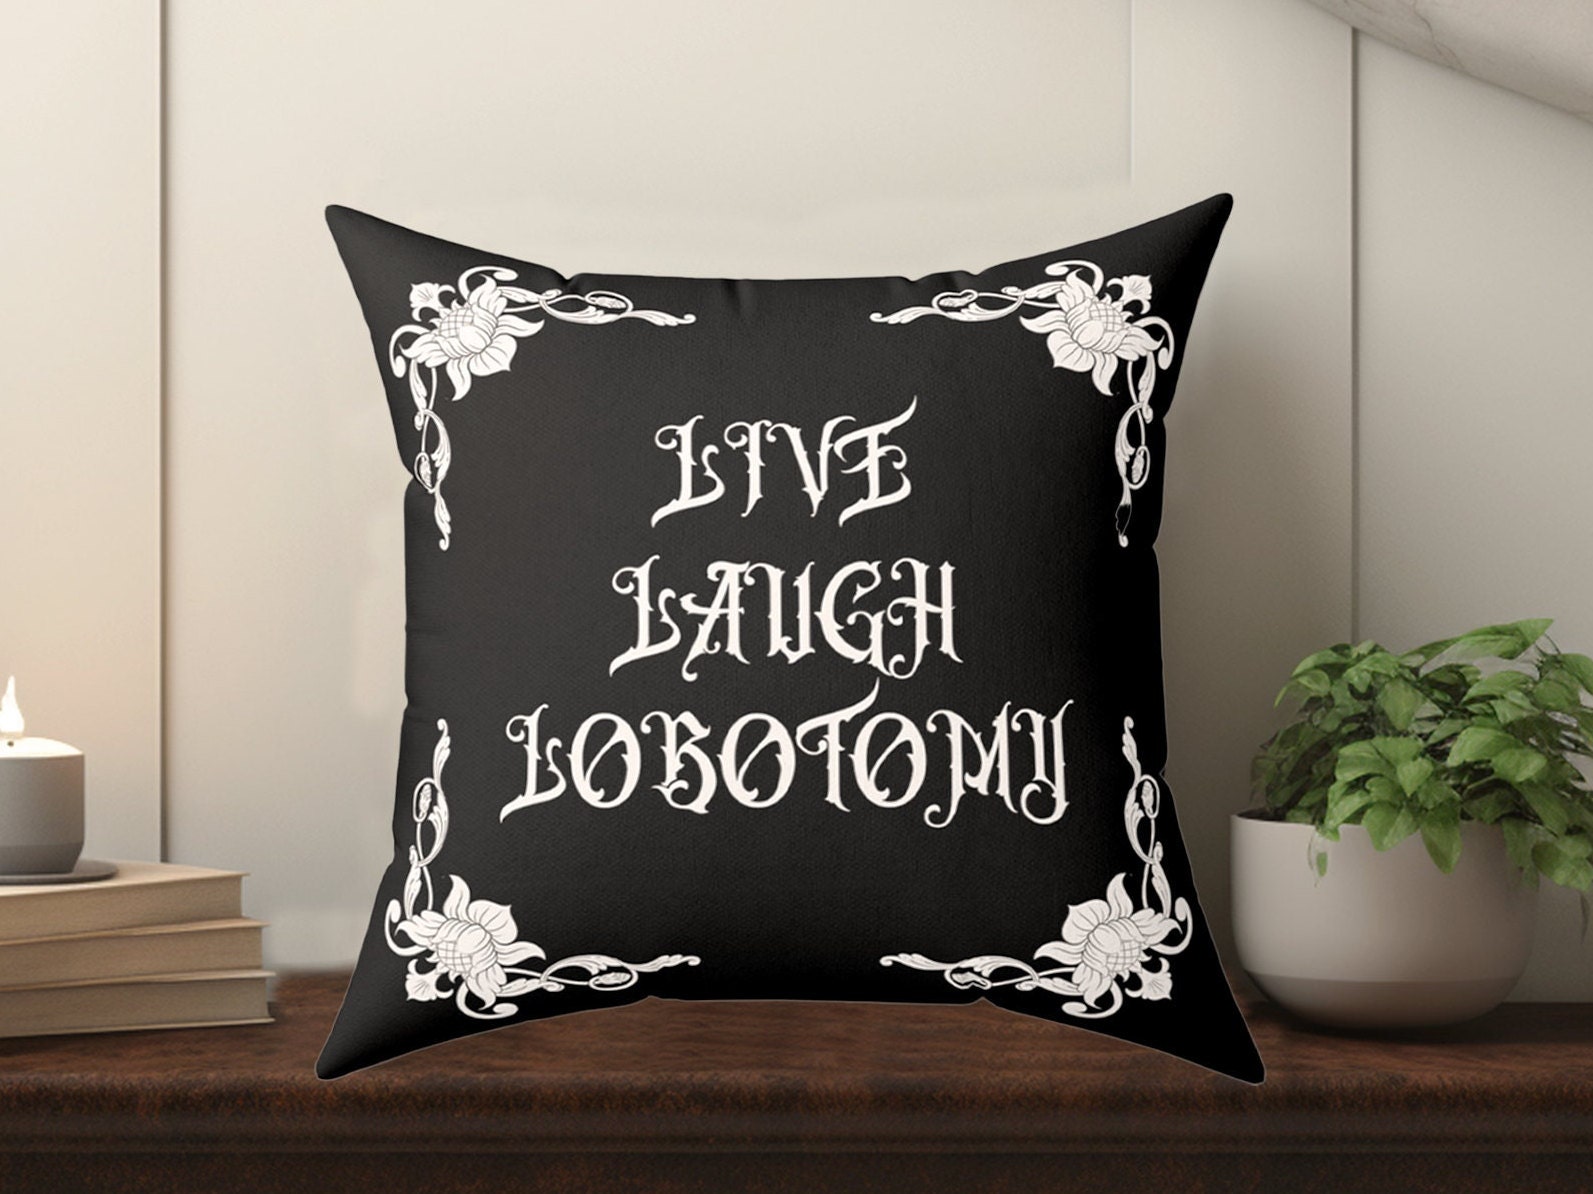  Live Laugh Quotes Live Laugh Smile Throw Pillow, 18x18